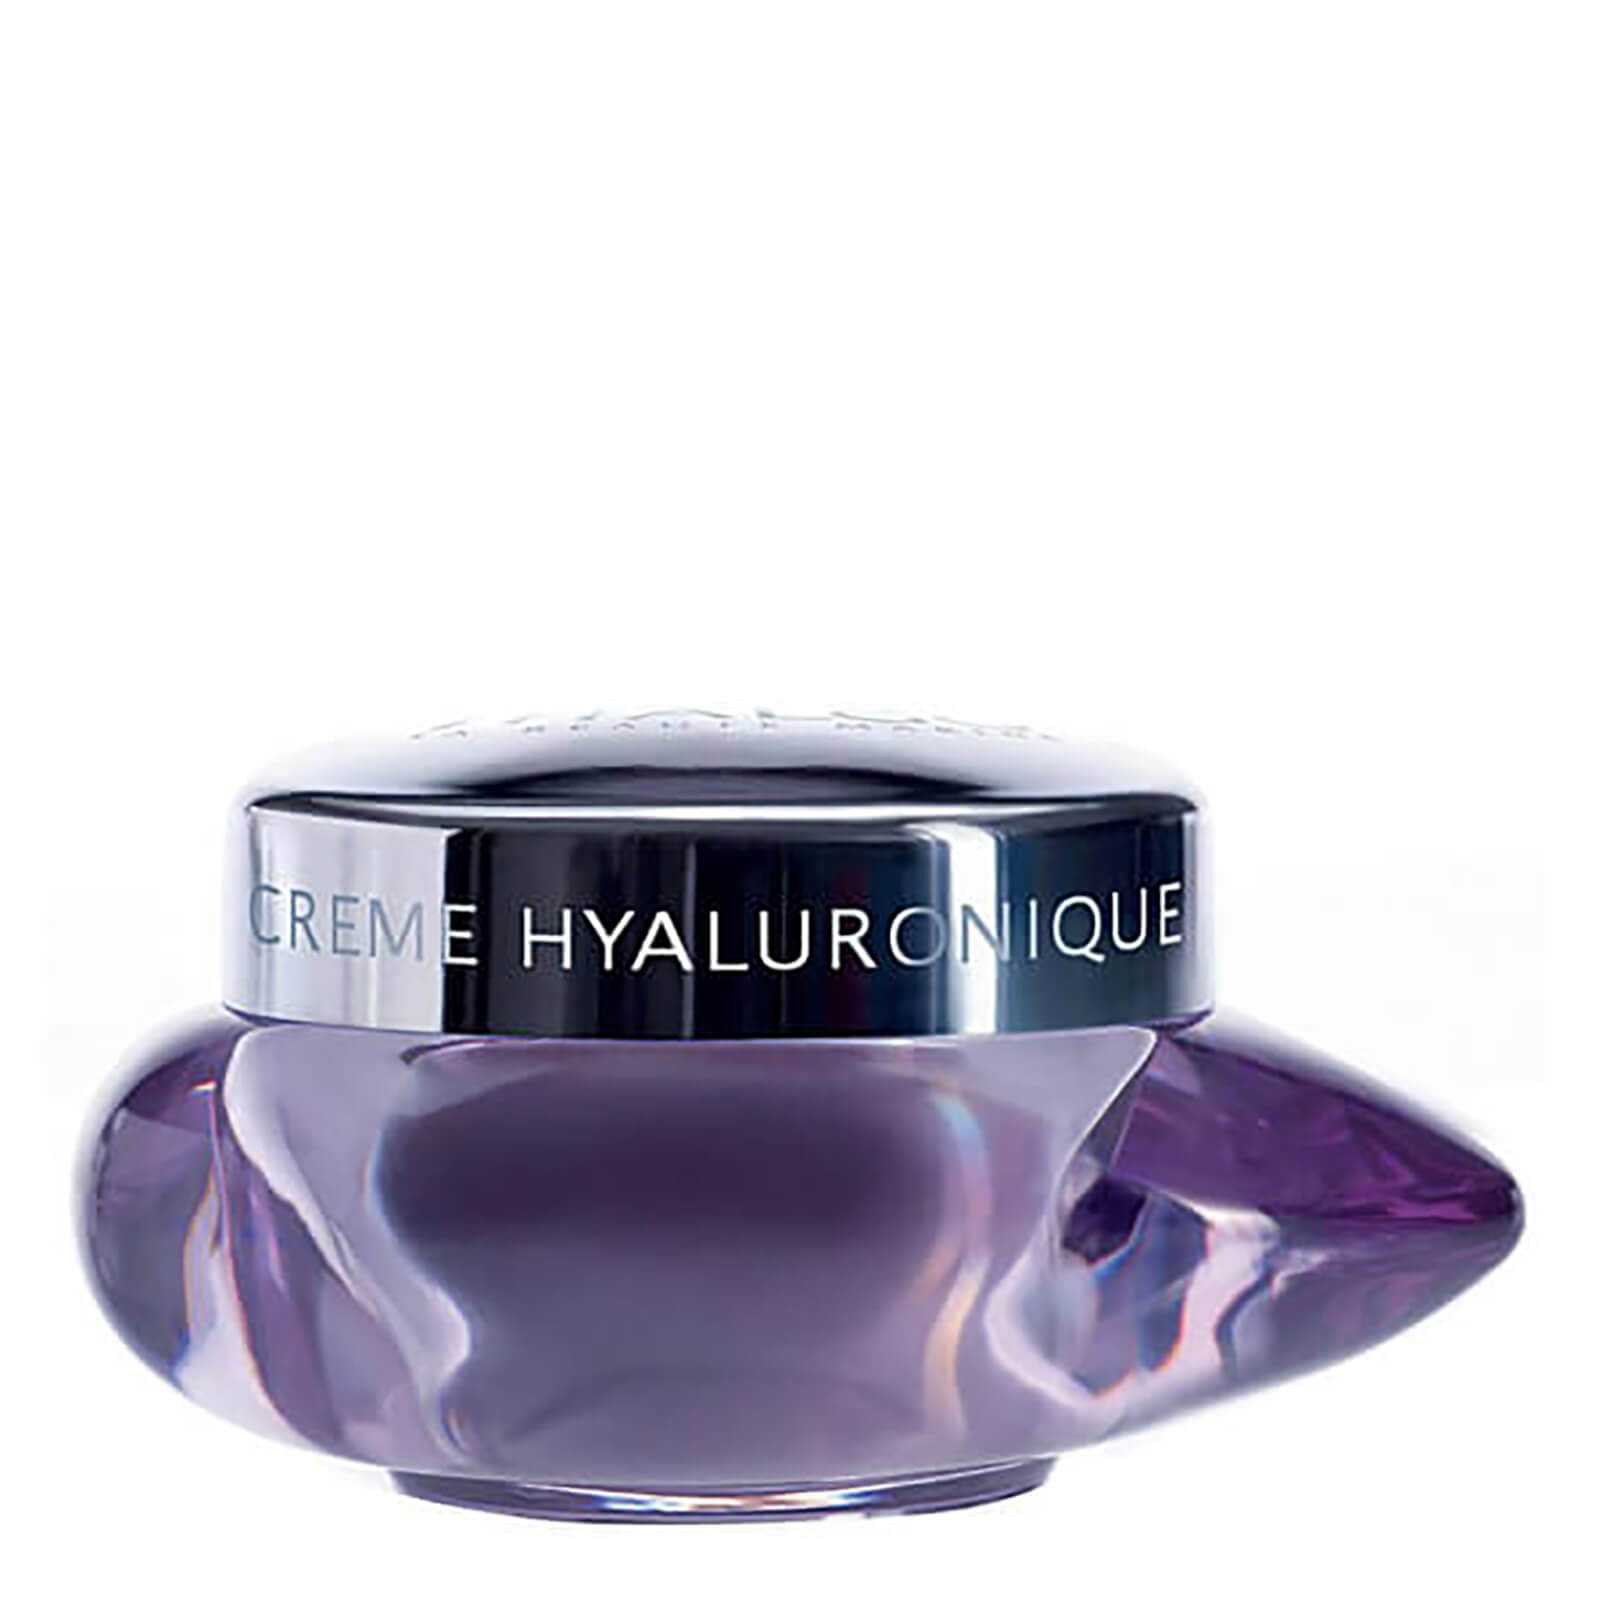 Crema Hyaluronic Cream de Thalgo (50 ml)